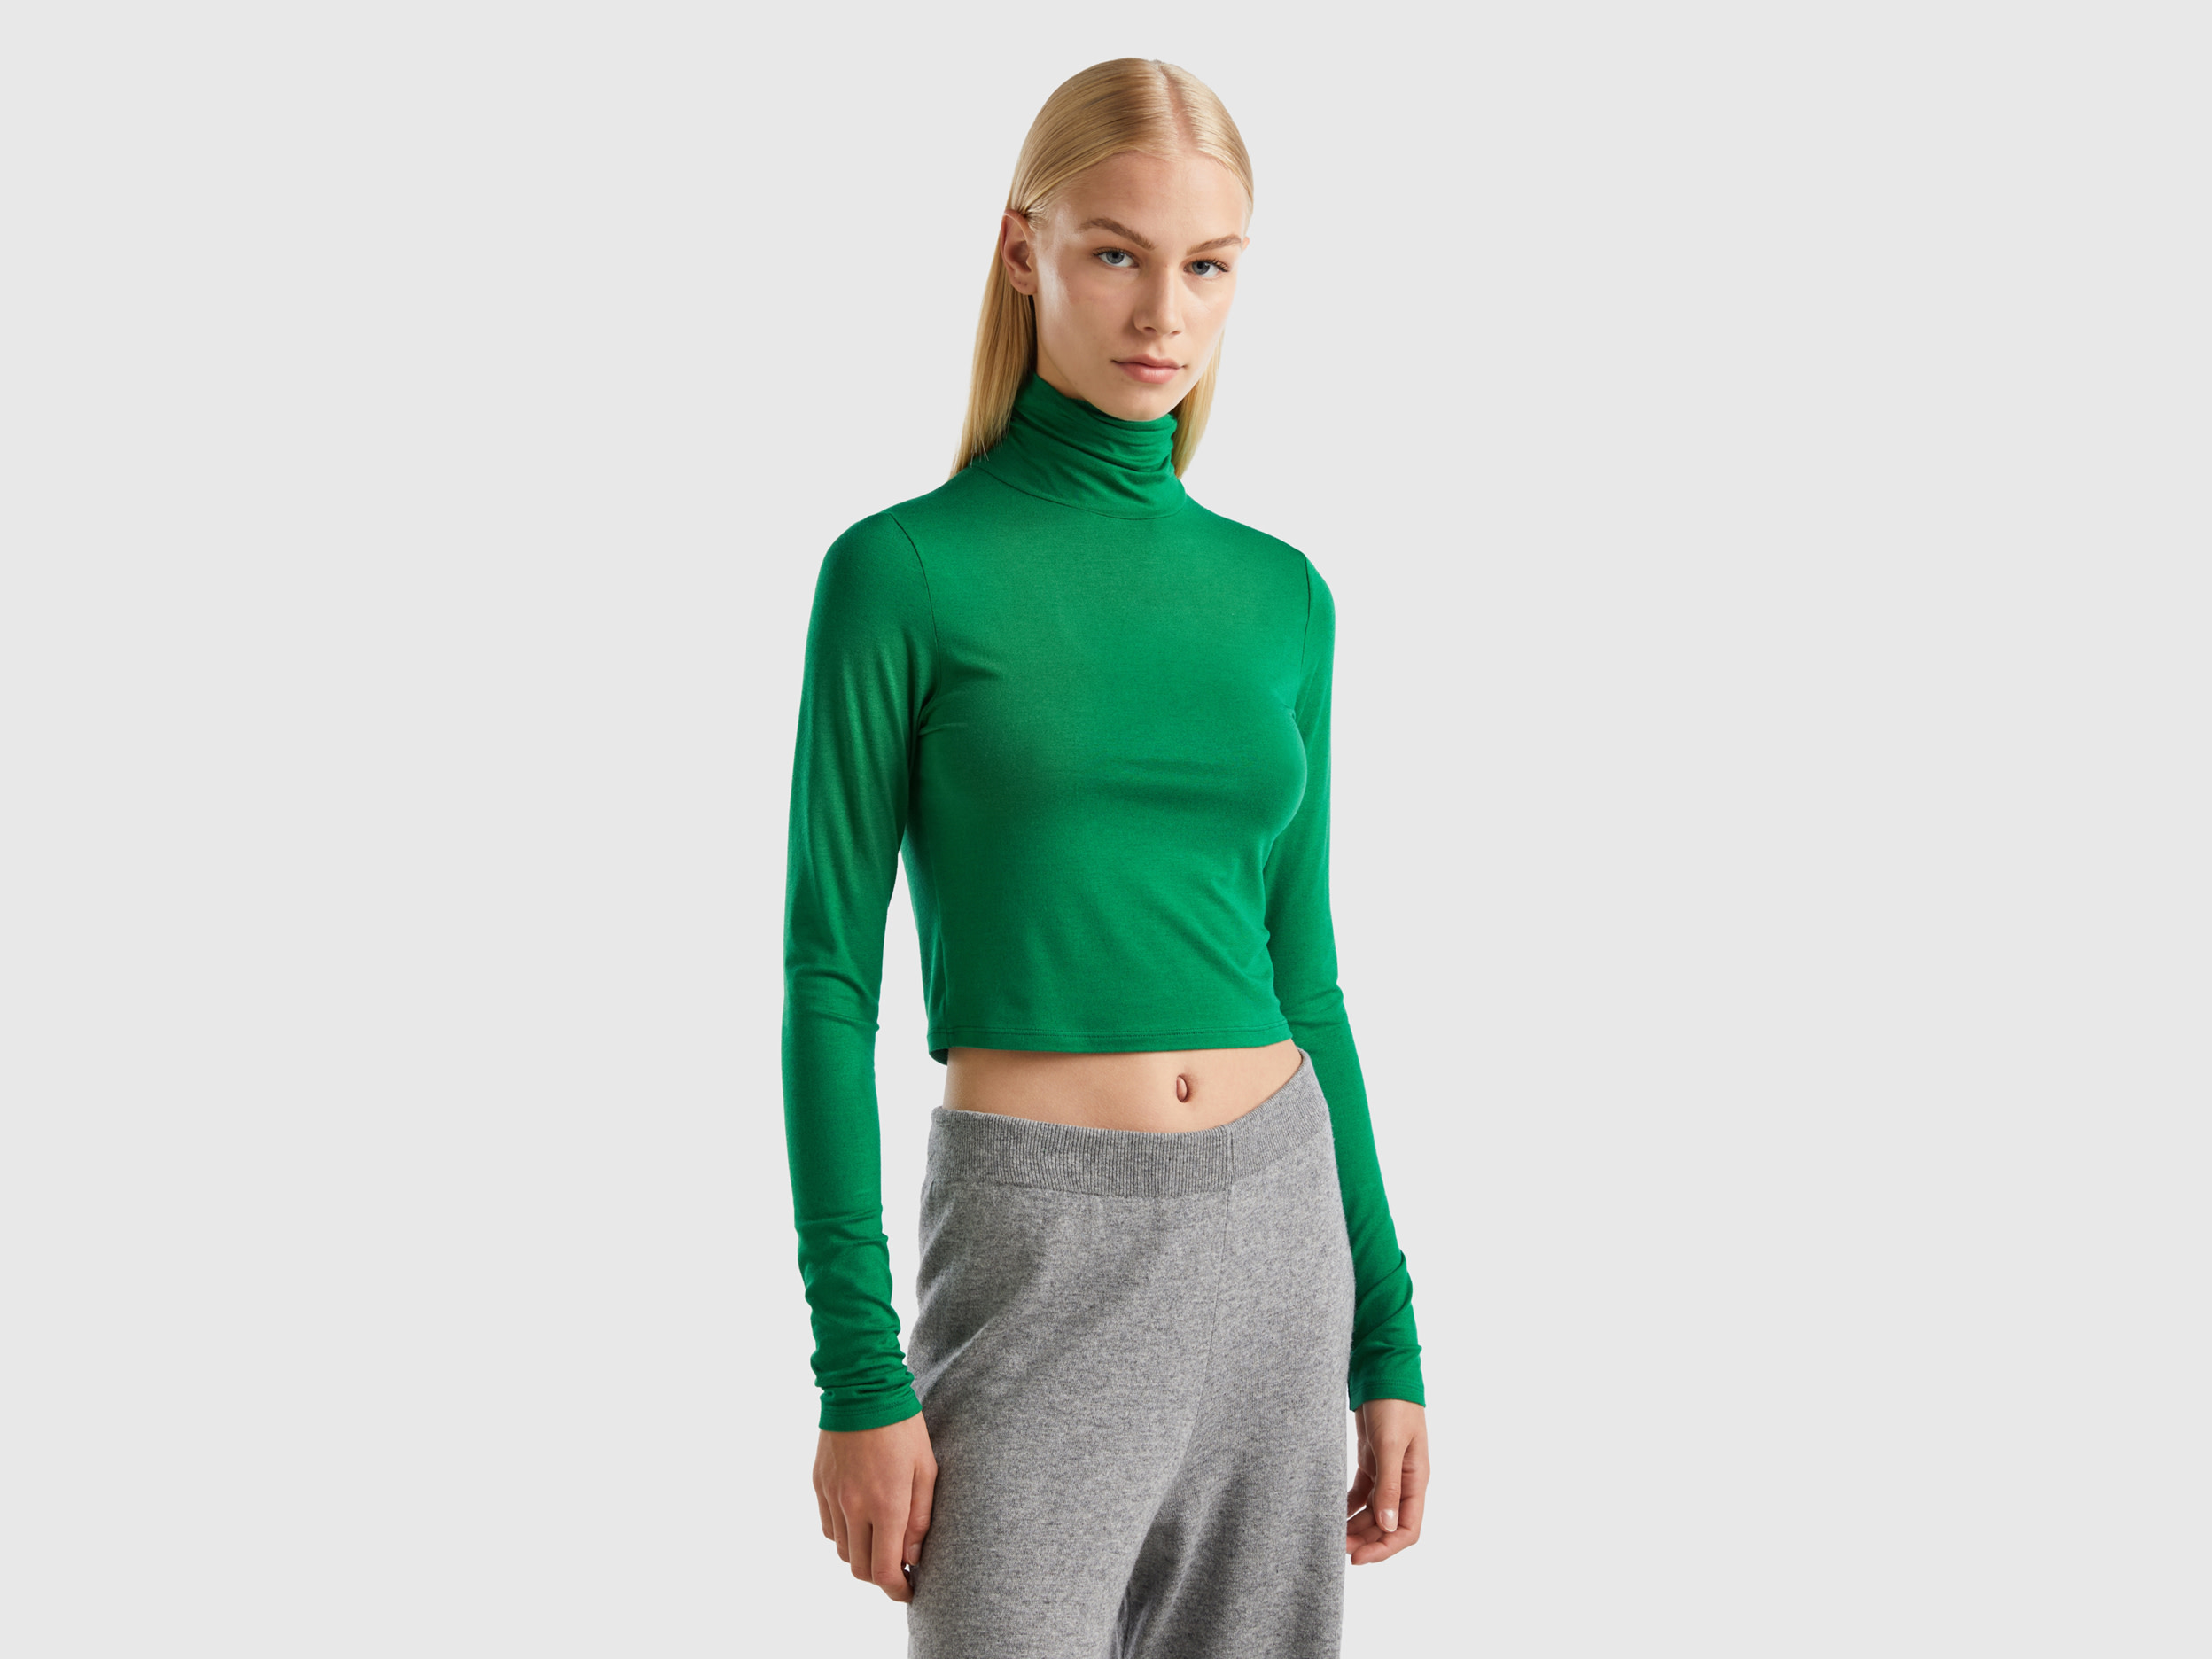 Benetton, T-shirt With High Neck, size L, Green, Women